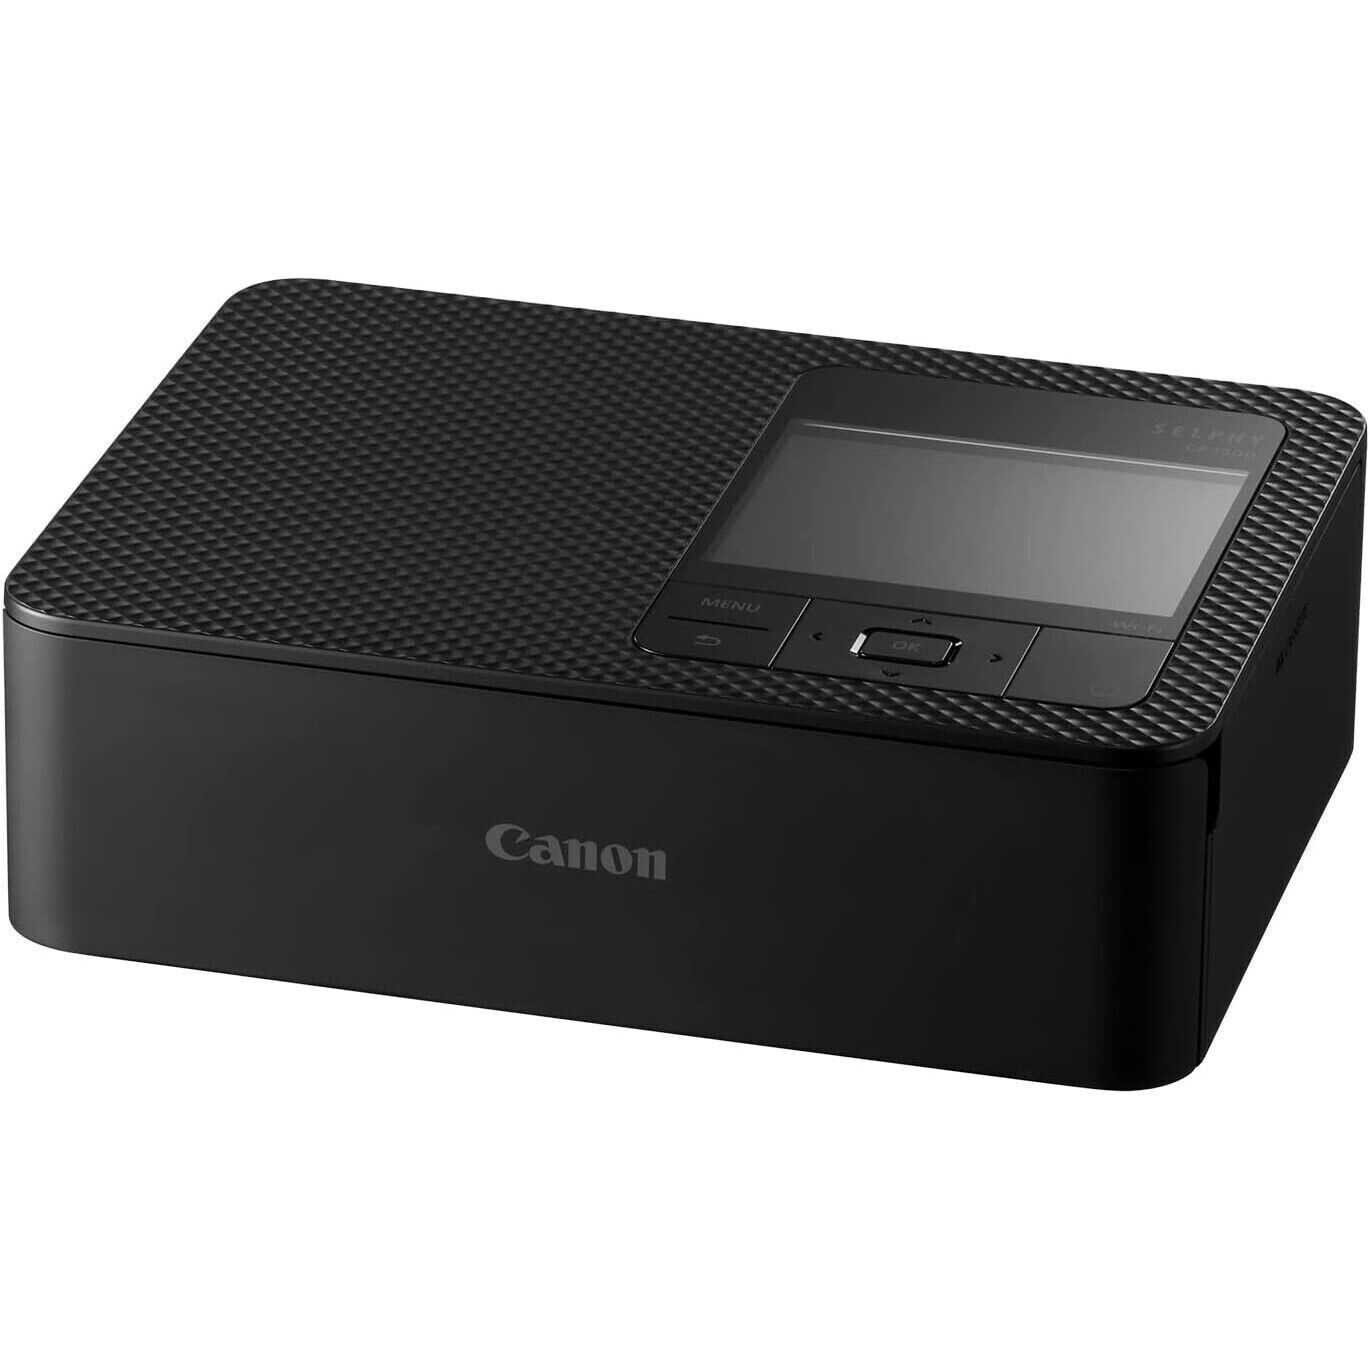 NEEGO Canon SELPHY CP1500 Wireless Compact Photo Printer - Black